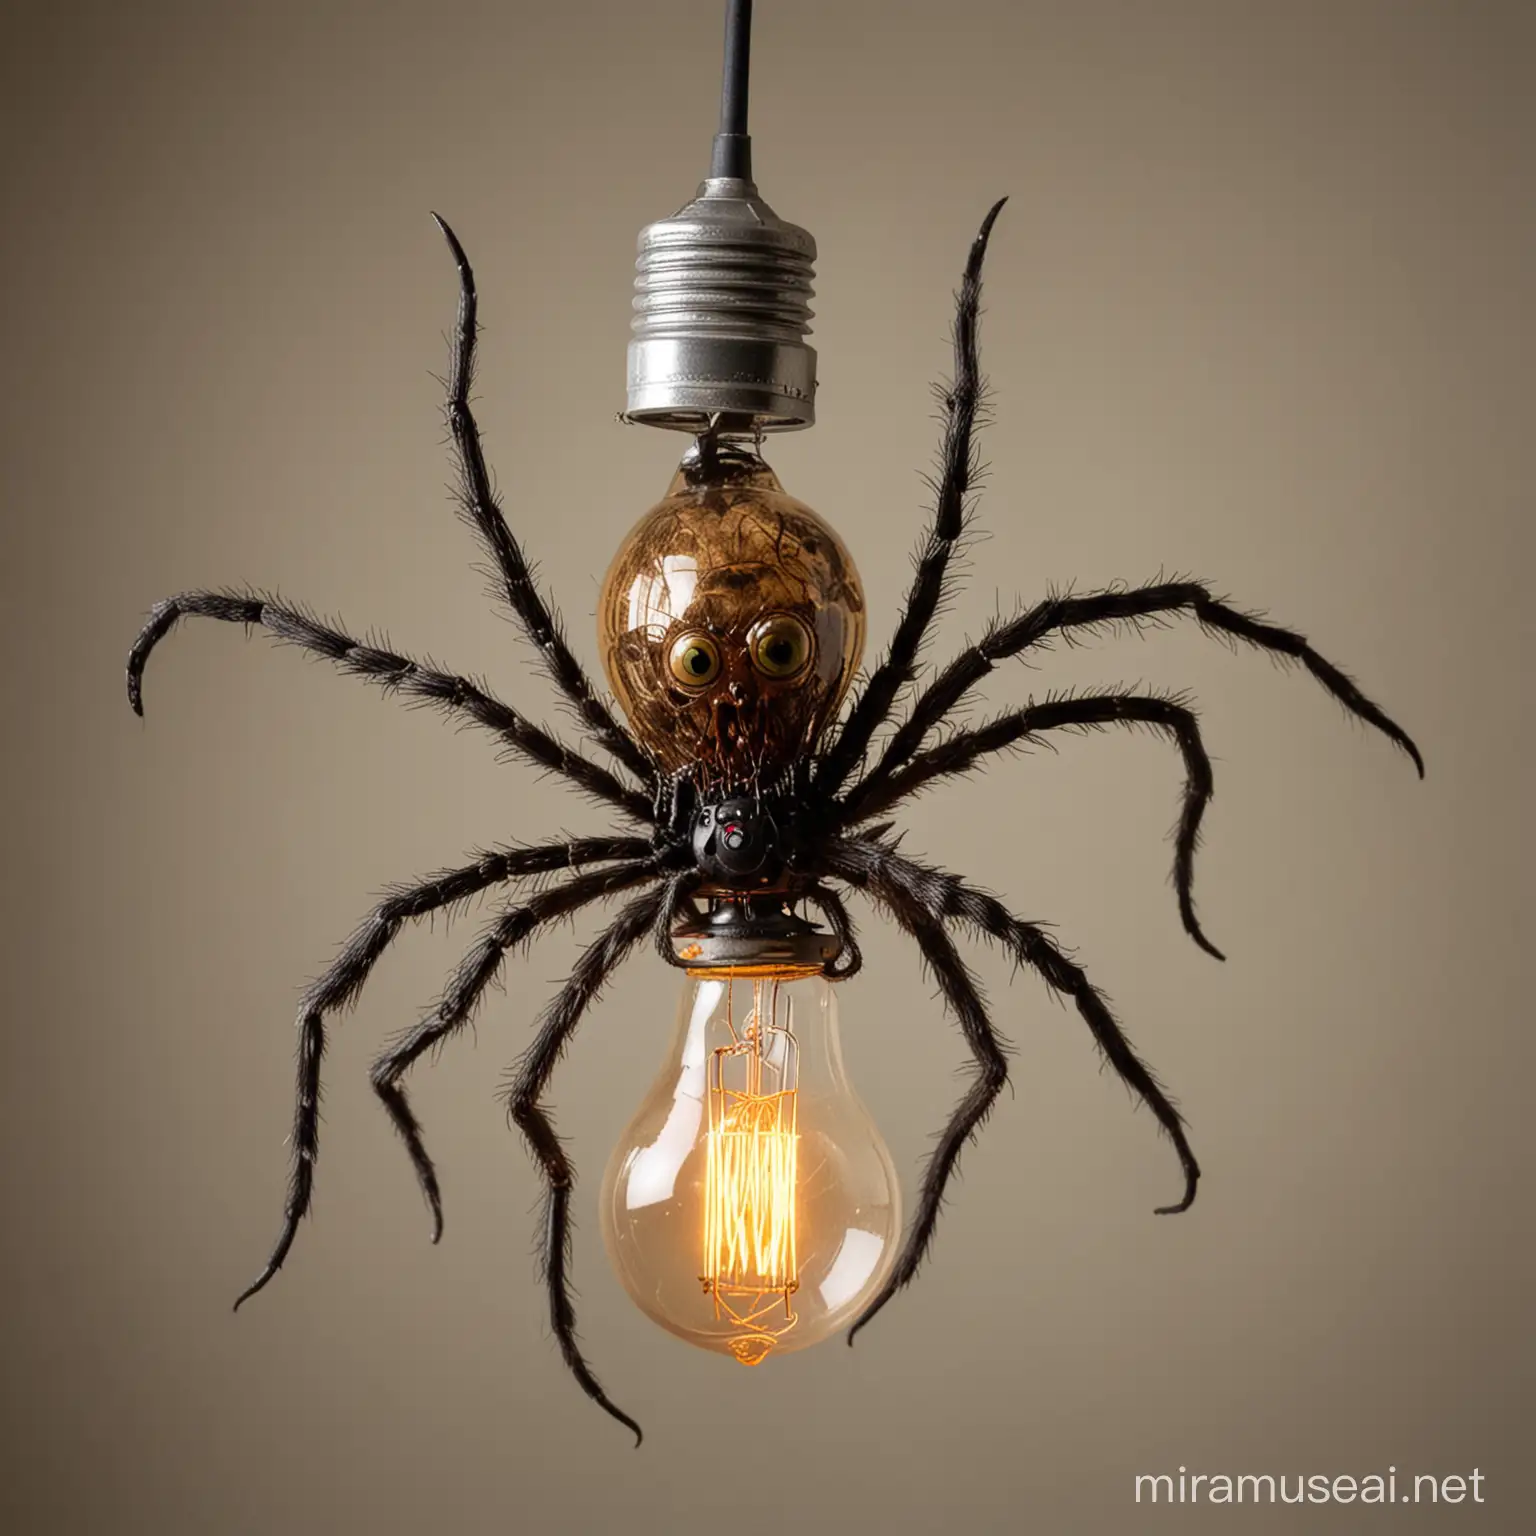 Zombie spider inside a vintage lightbulb